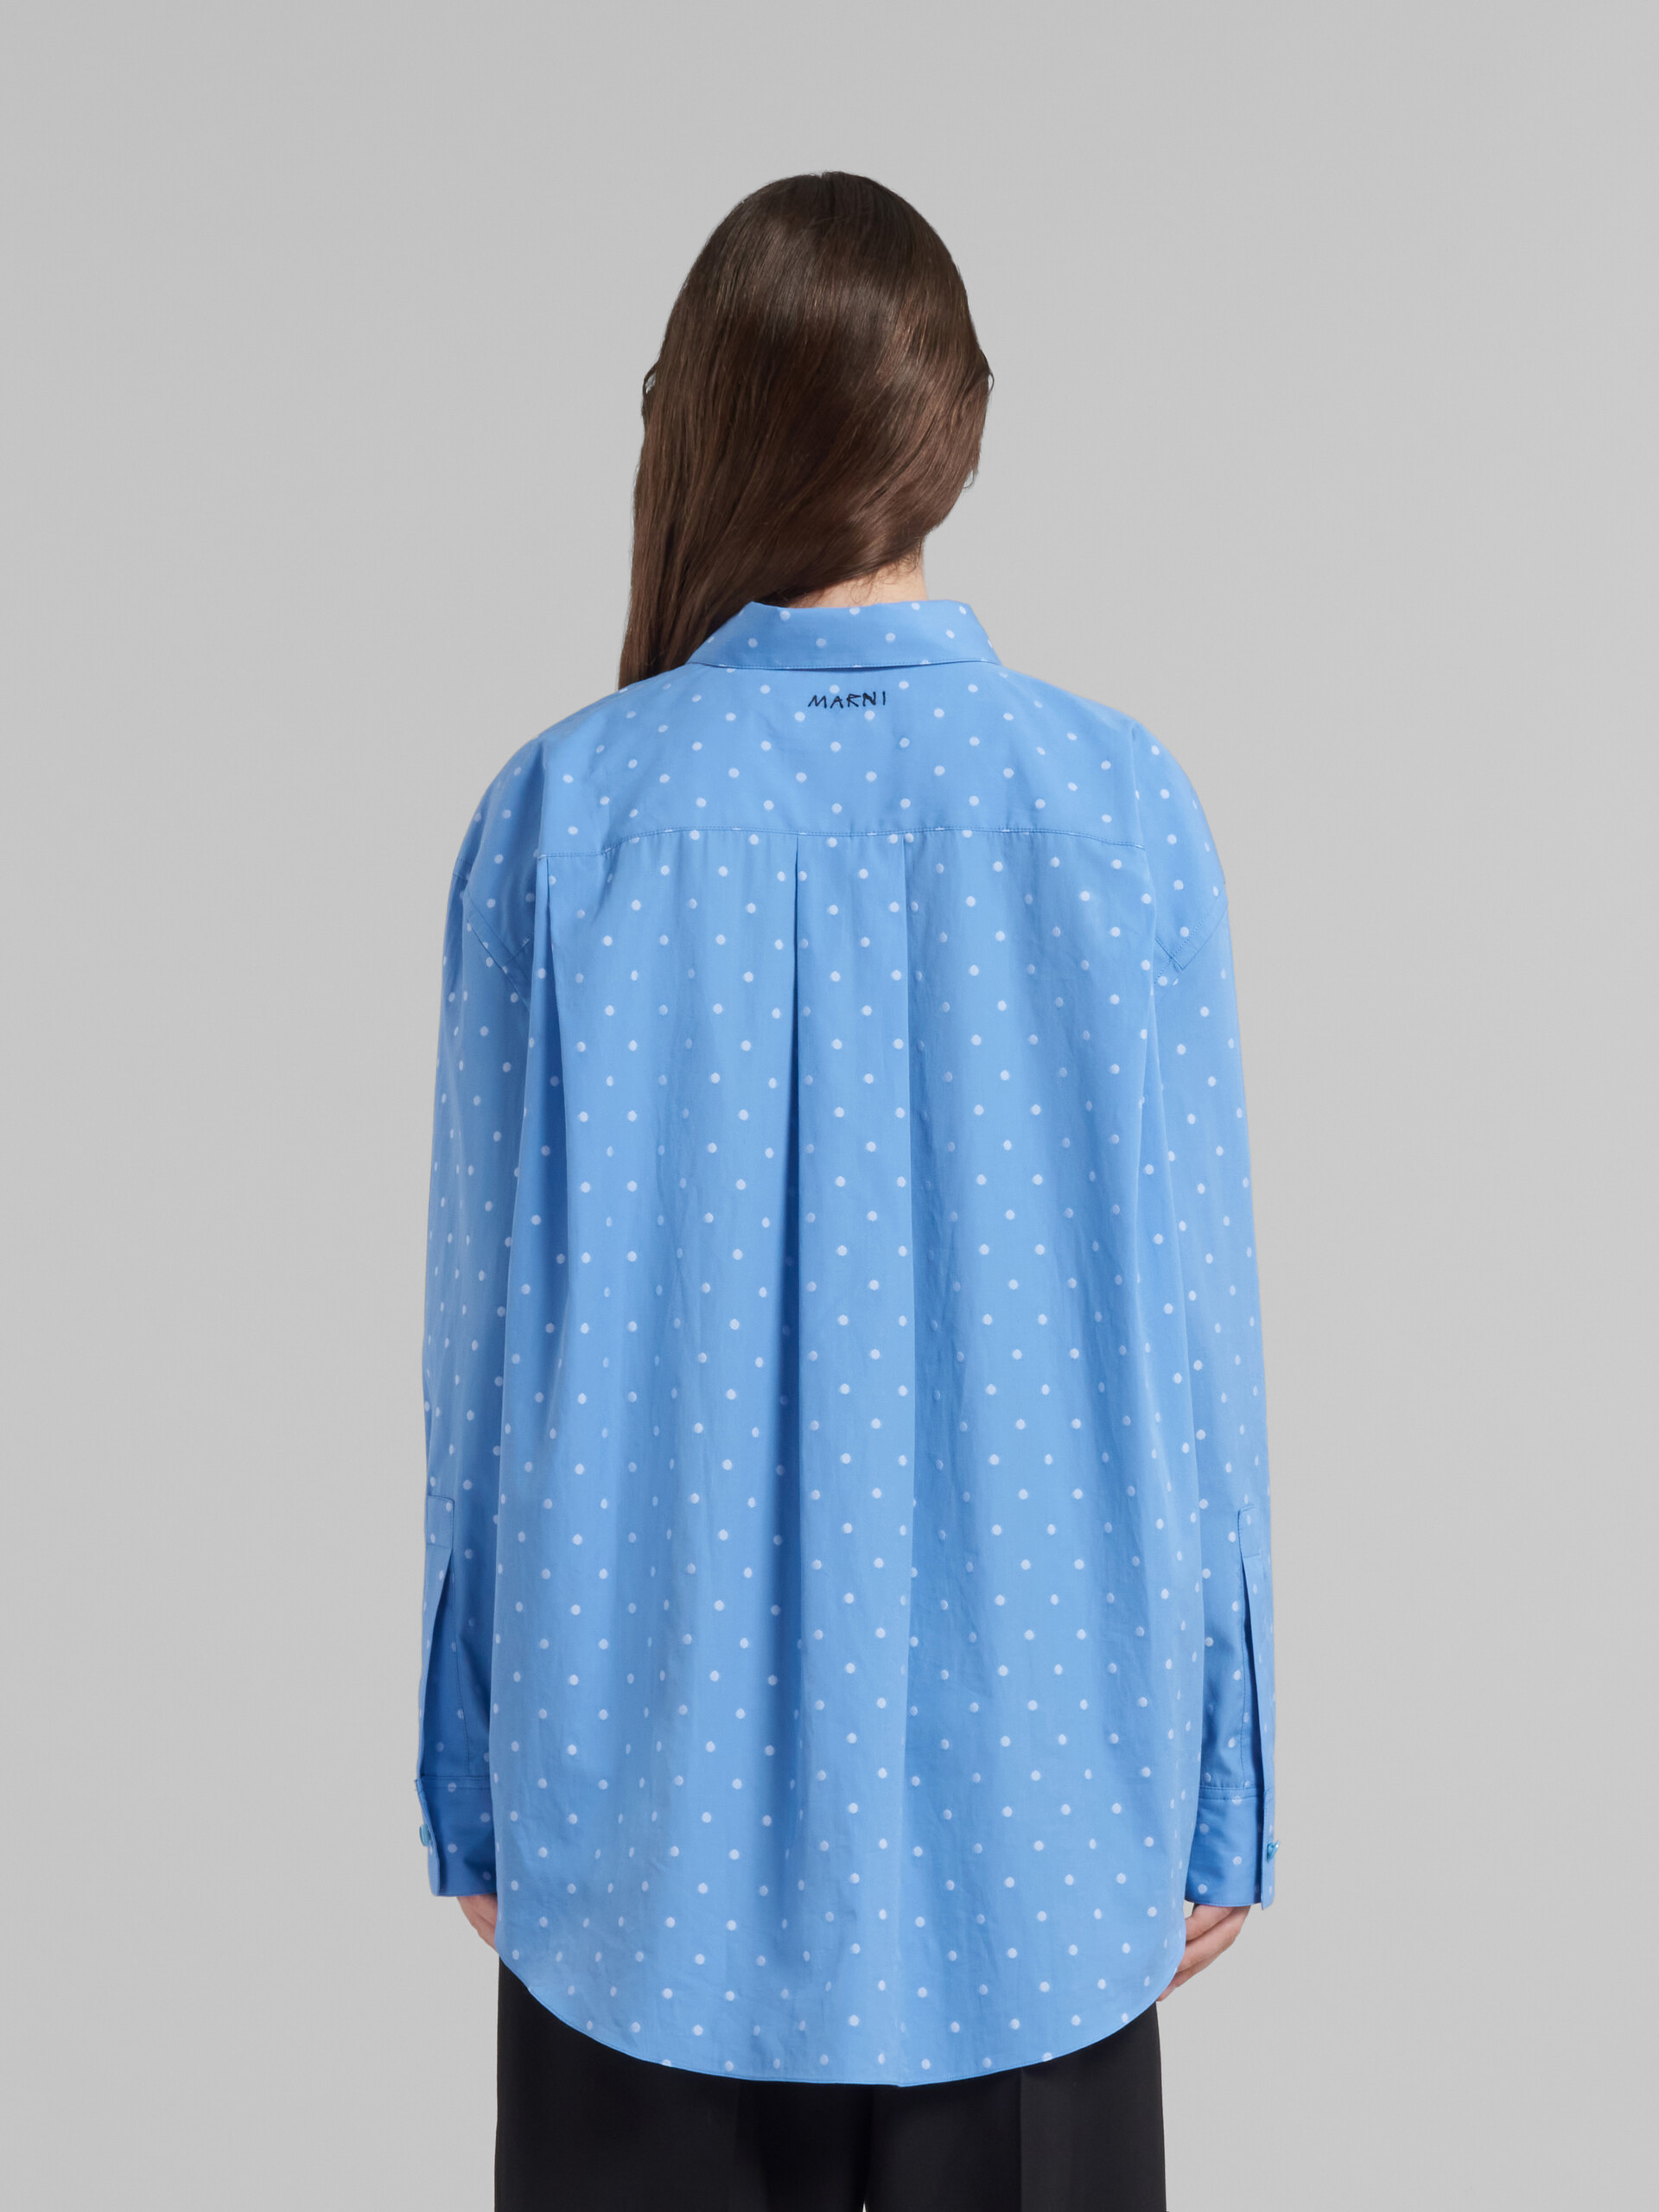 Light blue poplin shirt with polka dots - Shirts - Image 3